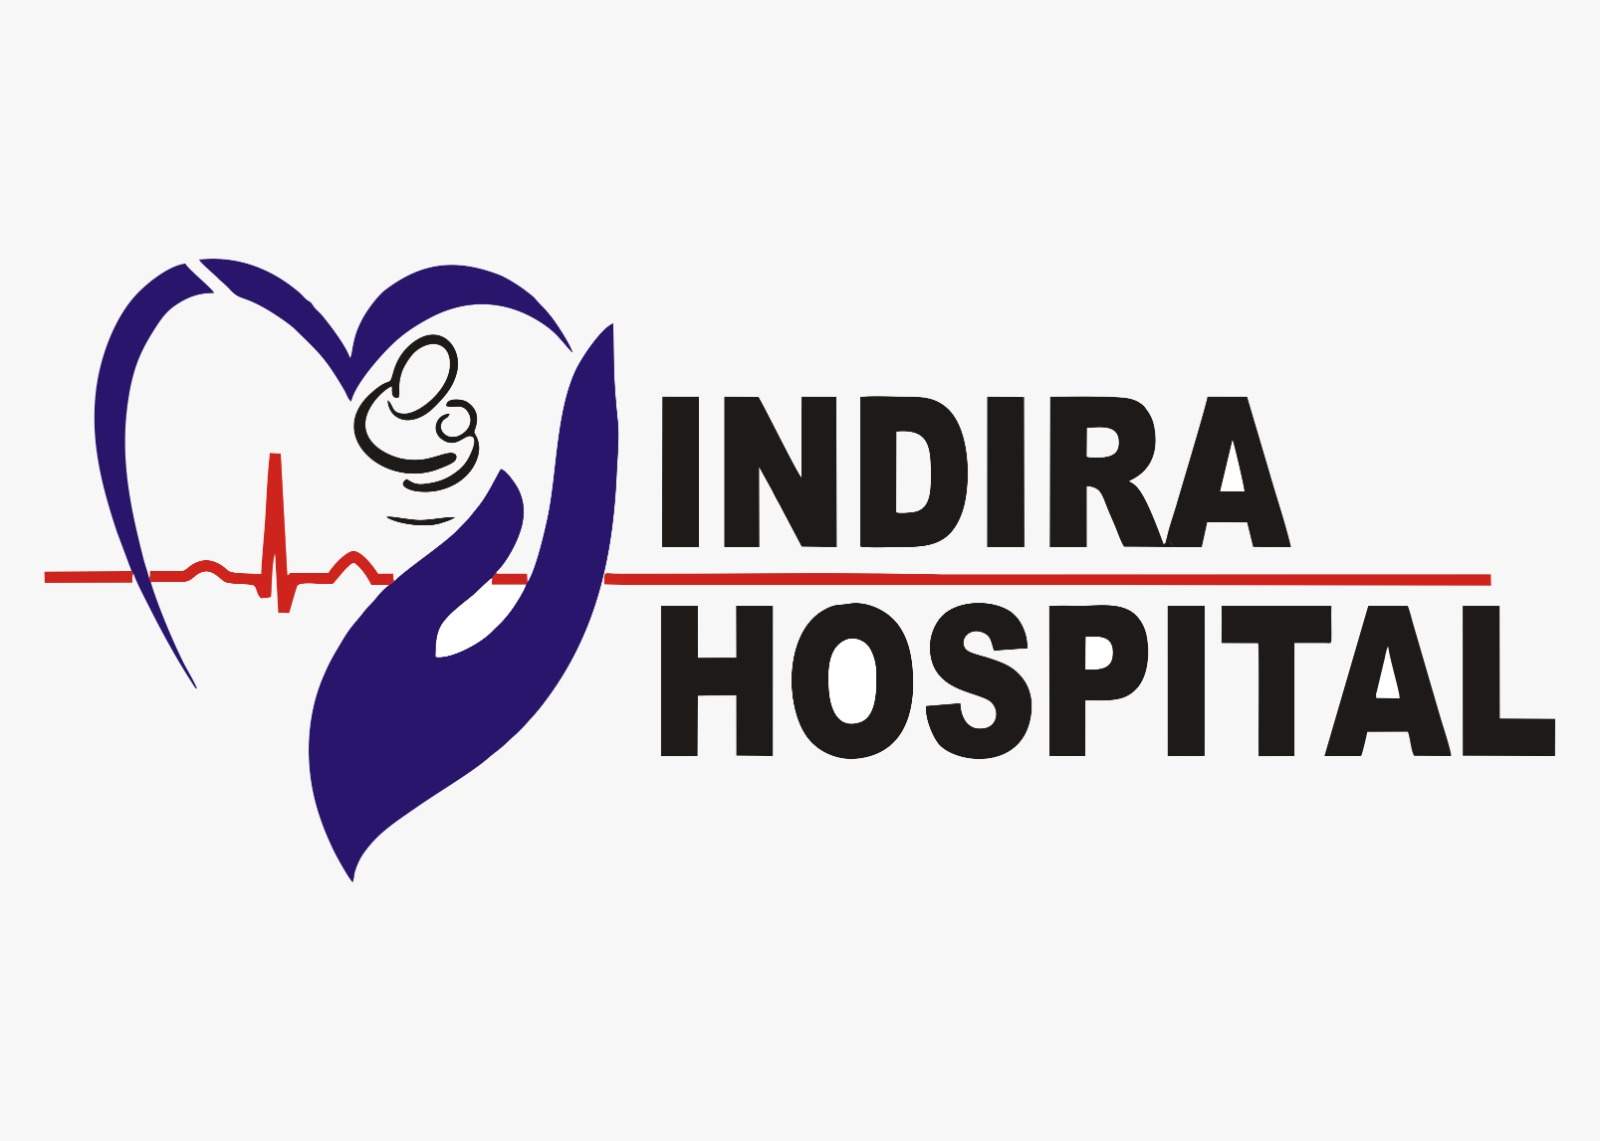 Indira-Hospital-ClintS-Logos-Codestrela